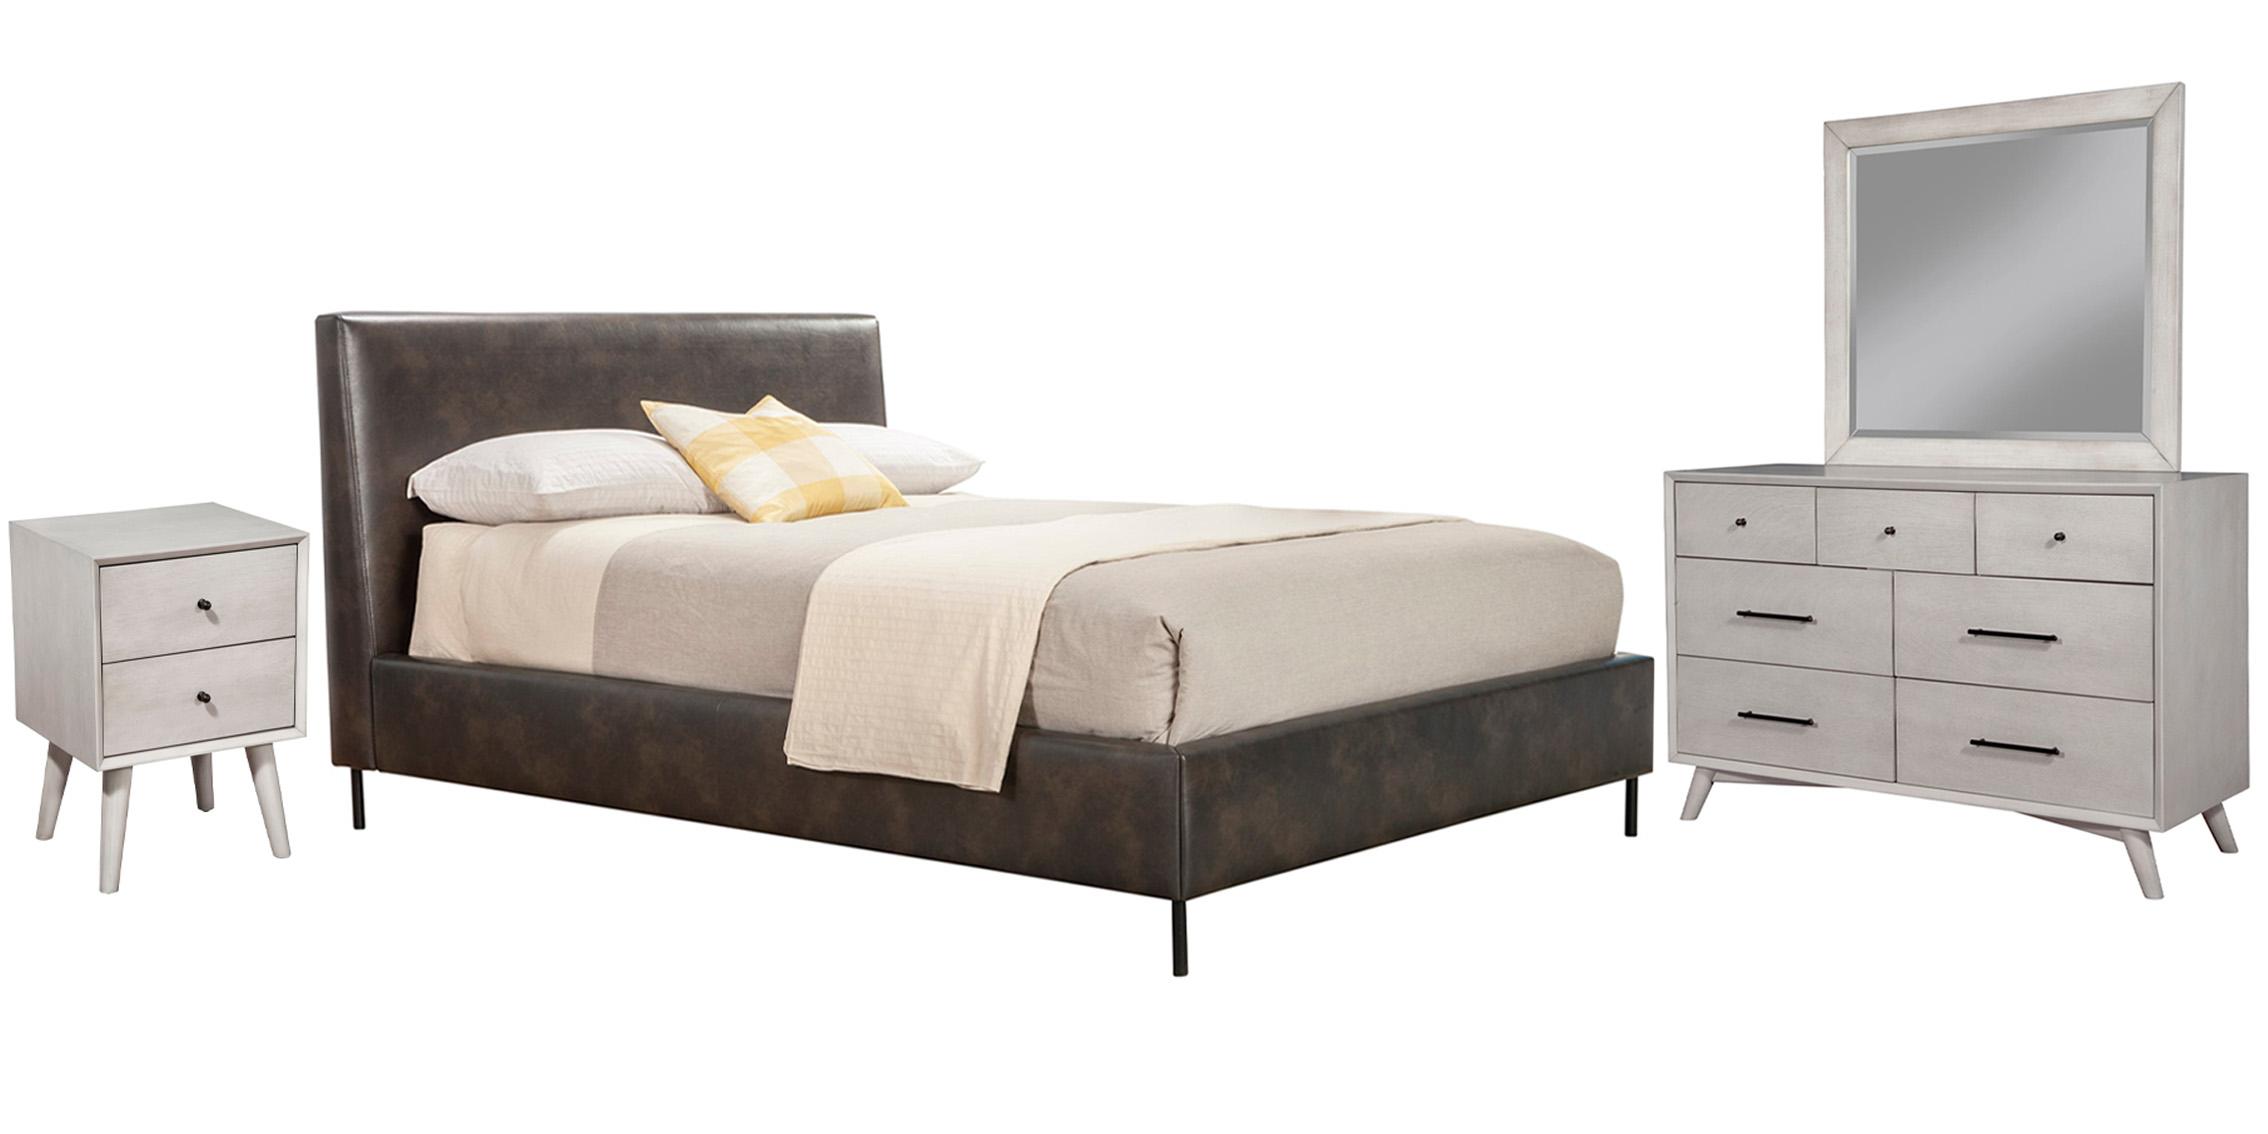 Modern Platform Bedroom Set SOPHIA / FLYNN 6902F-GRY-Set-4 in Gray Faux Leather